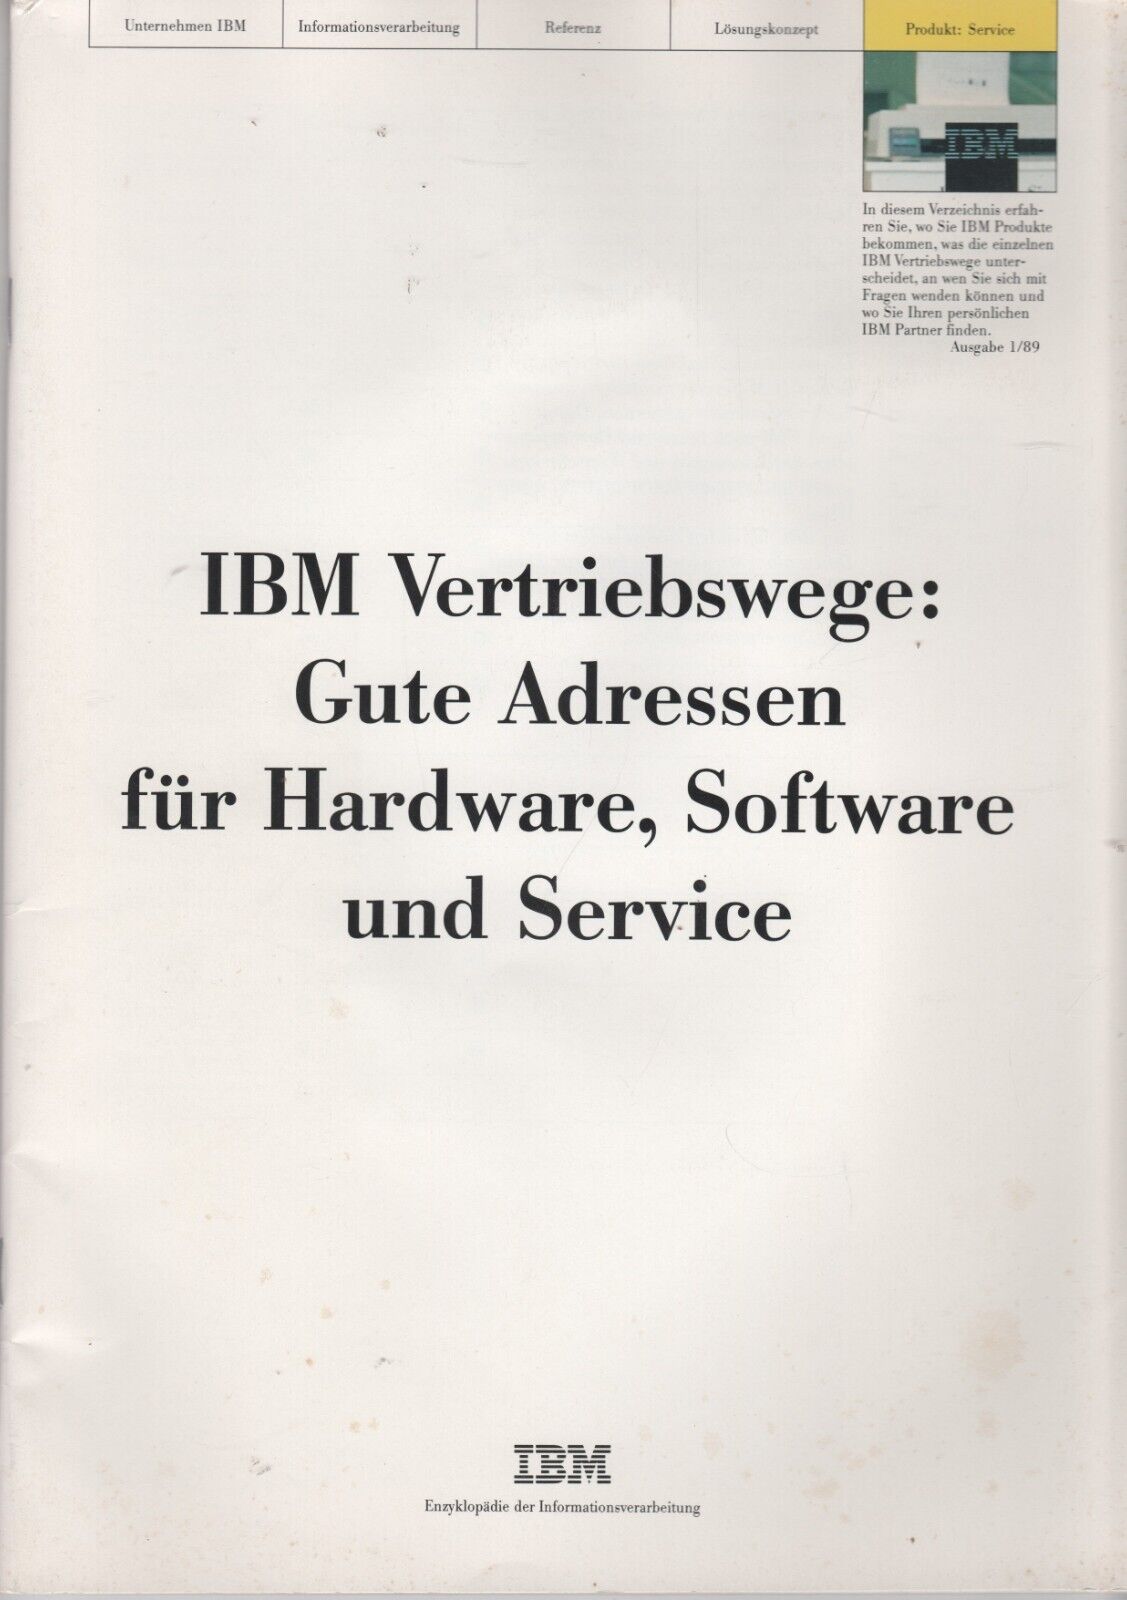 ITHistory (1989) IBM Brochure \